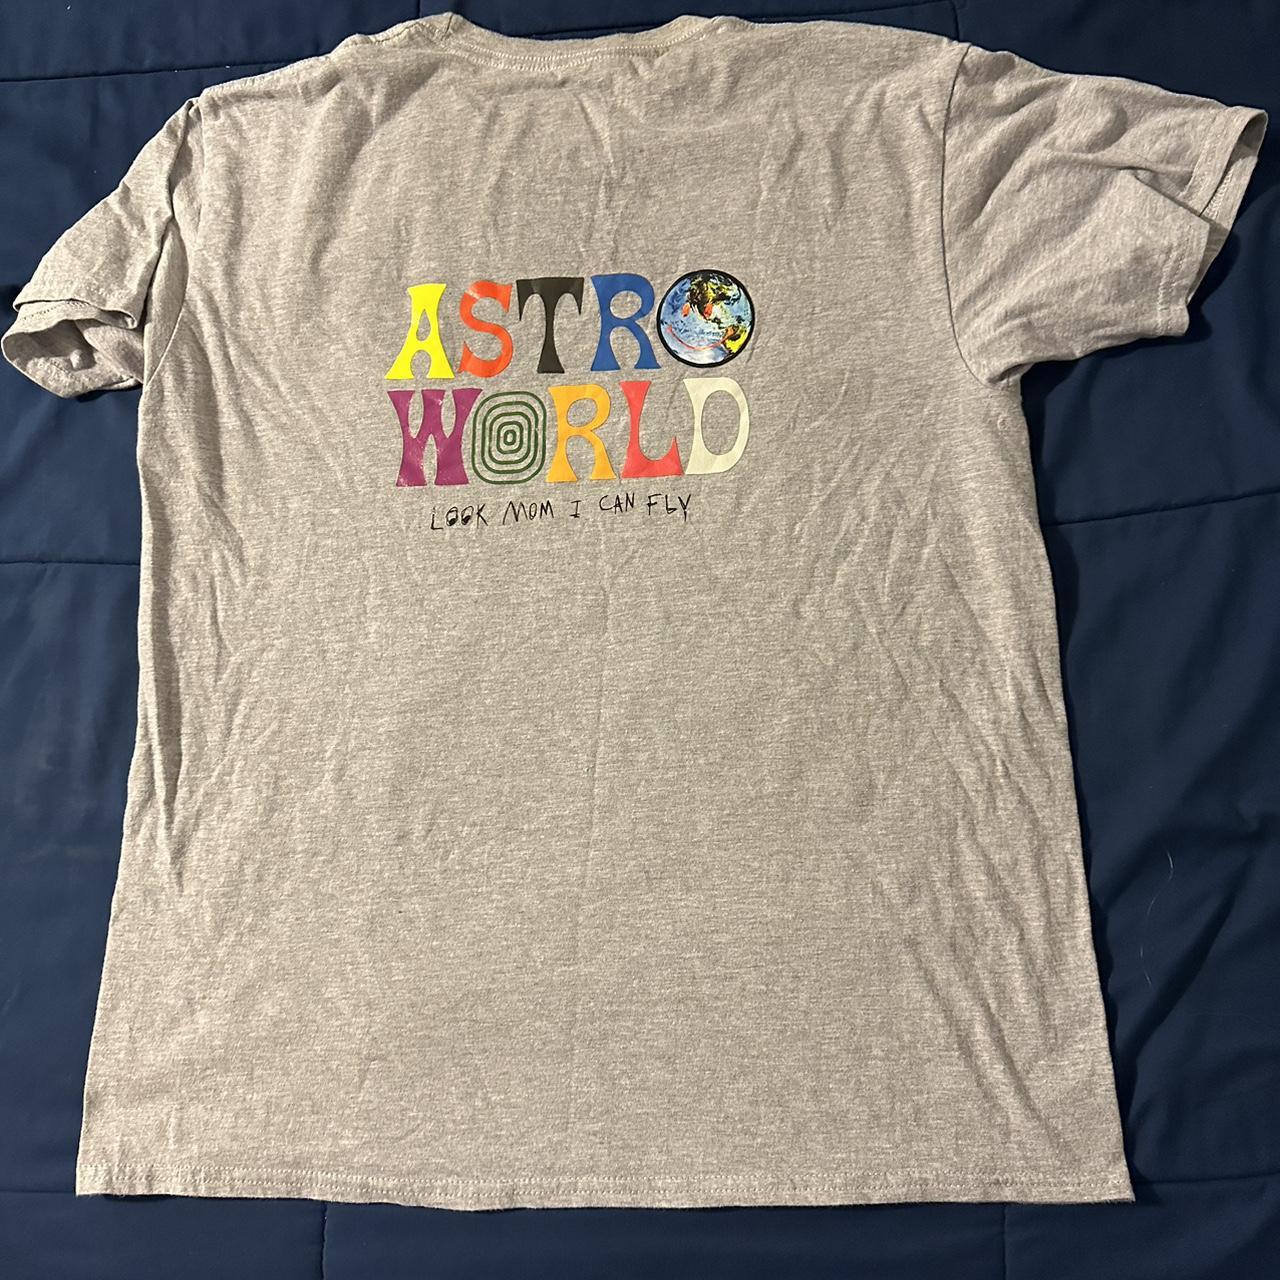 Travis Scott Astroworld shirt - Depop